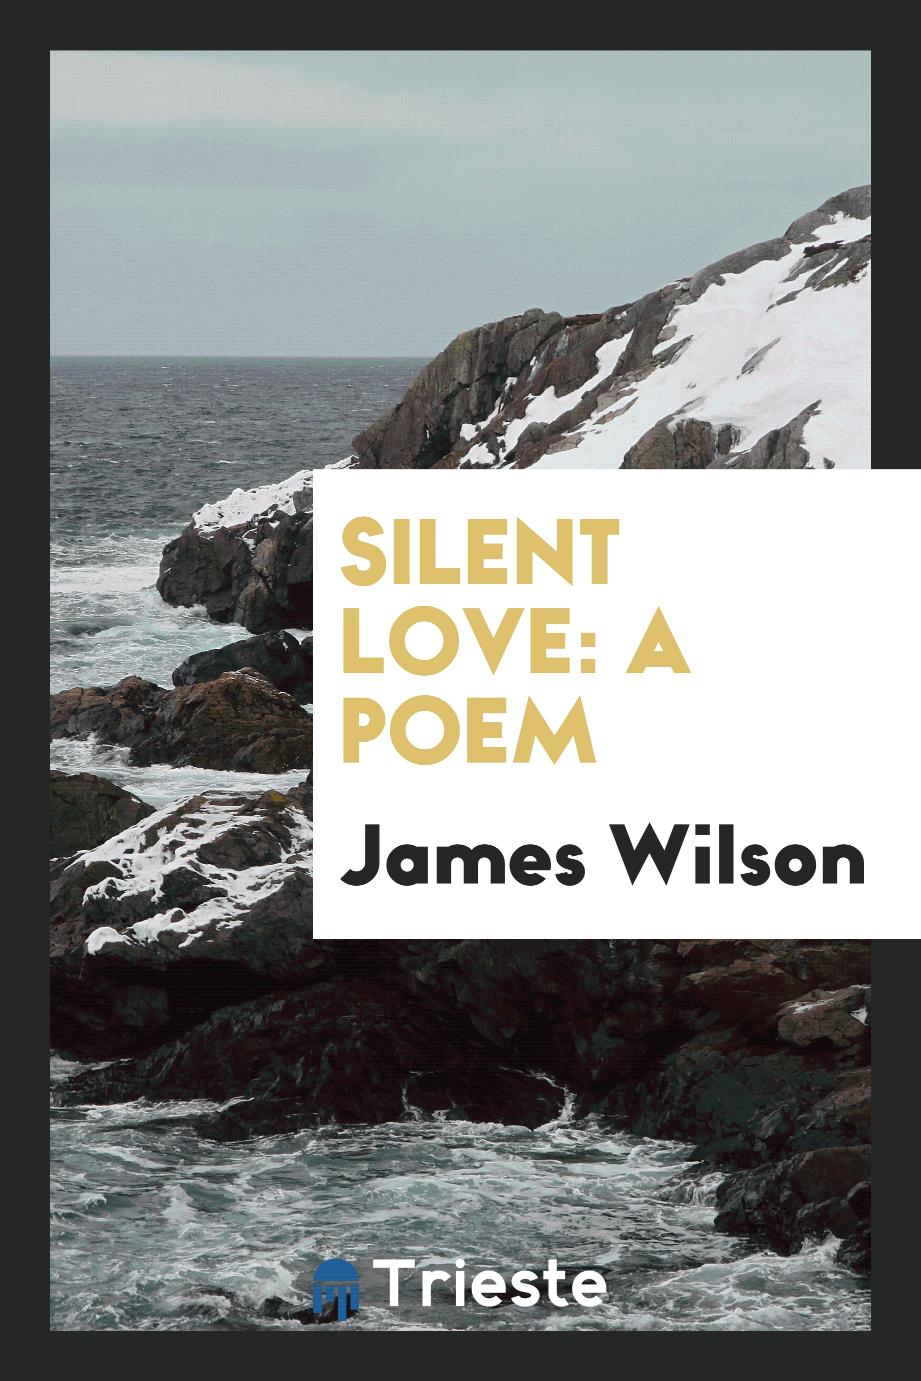 Silent love: a poem